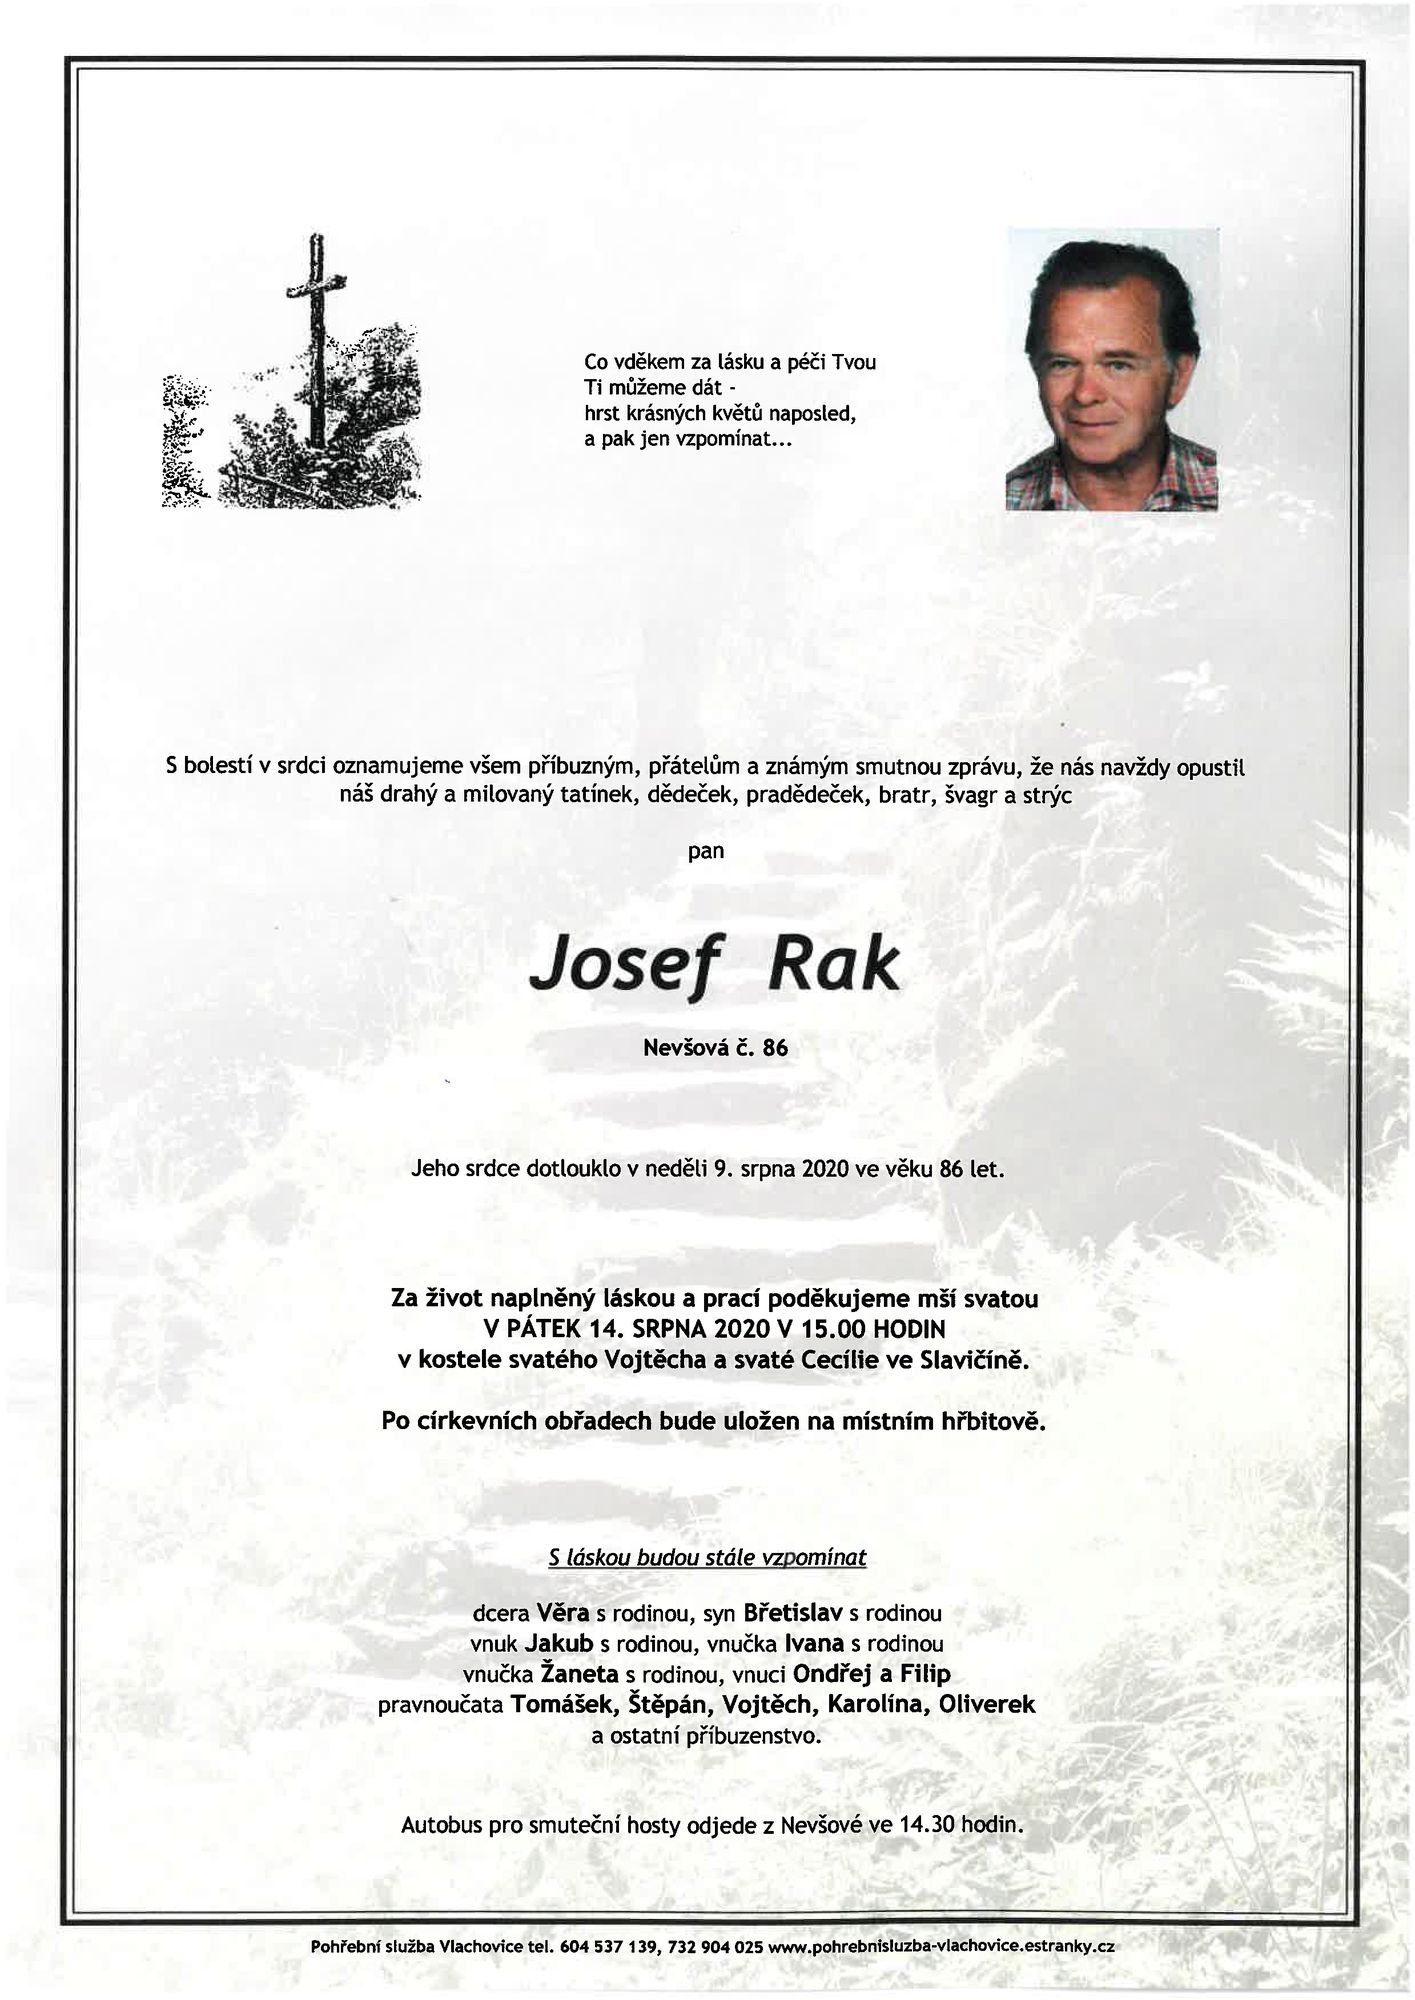 Josef Rak